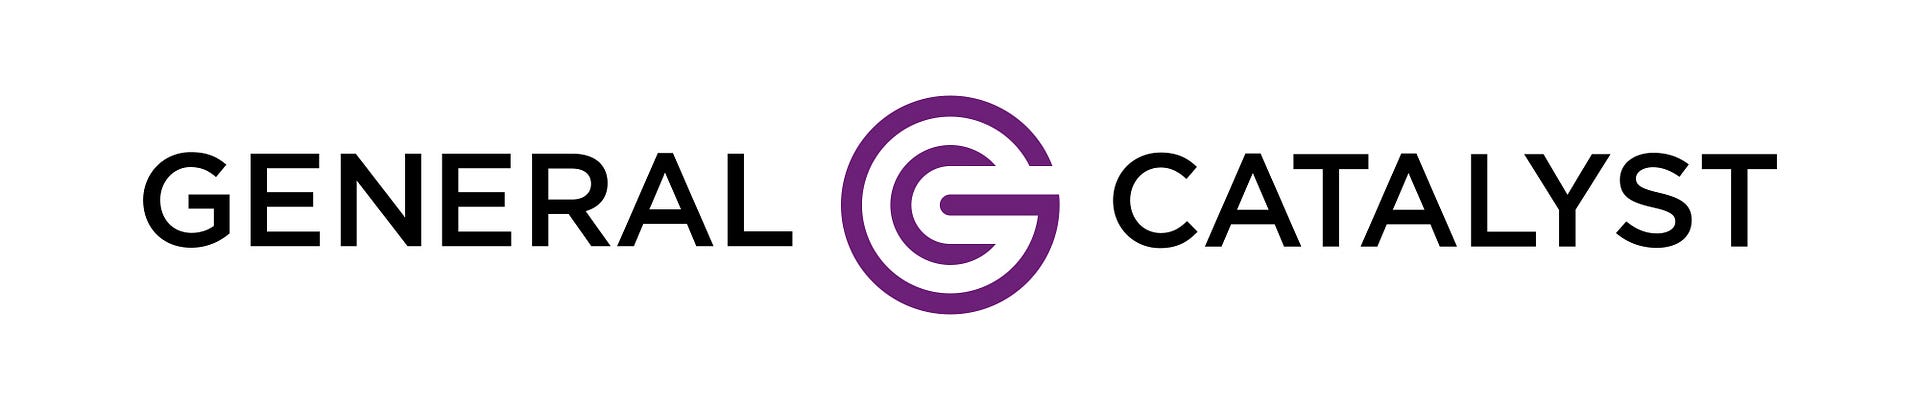 Image result for general catalyst logo